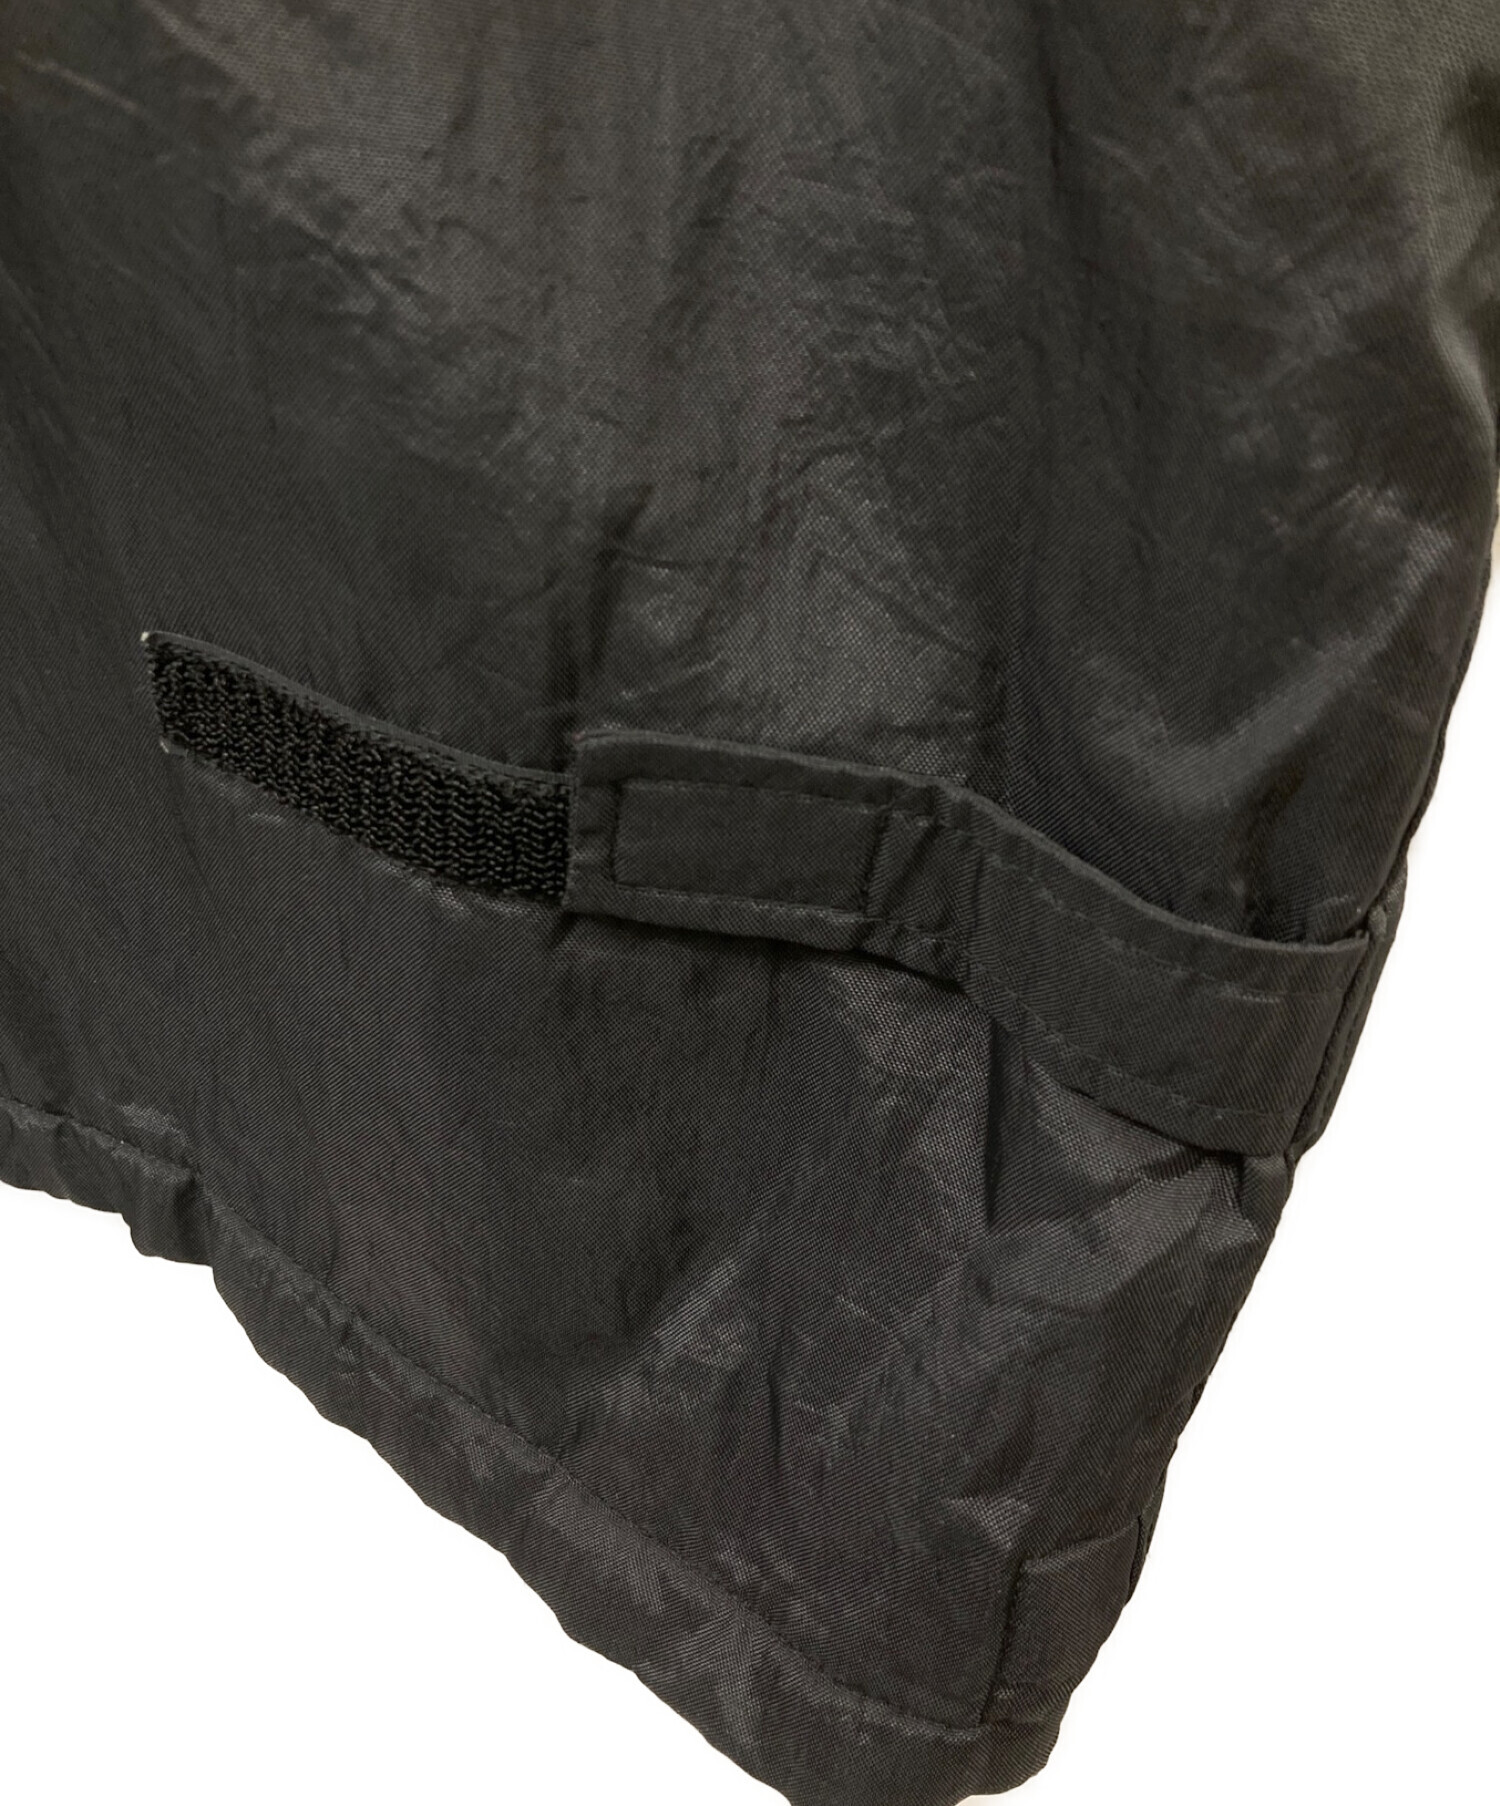 OLD GAP (オールドギャップ) Tactical Nylon fleece Vest ブラック サイズ:Ｌ